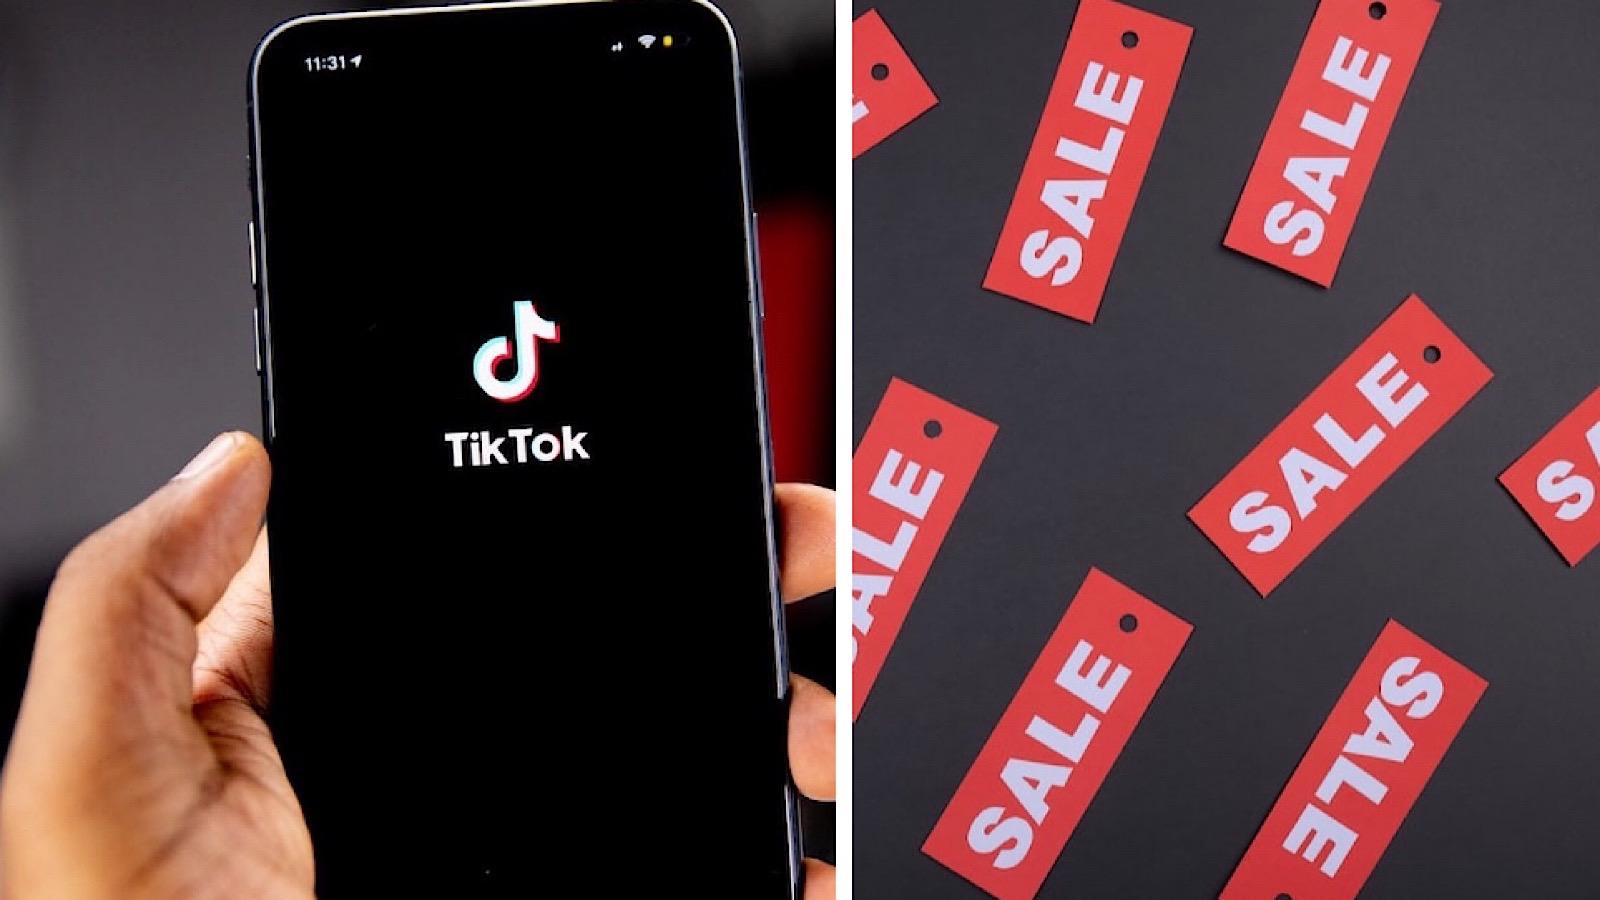 TikTok offering early Black Friday deals